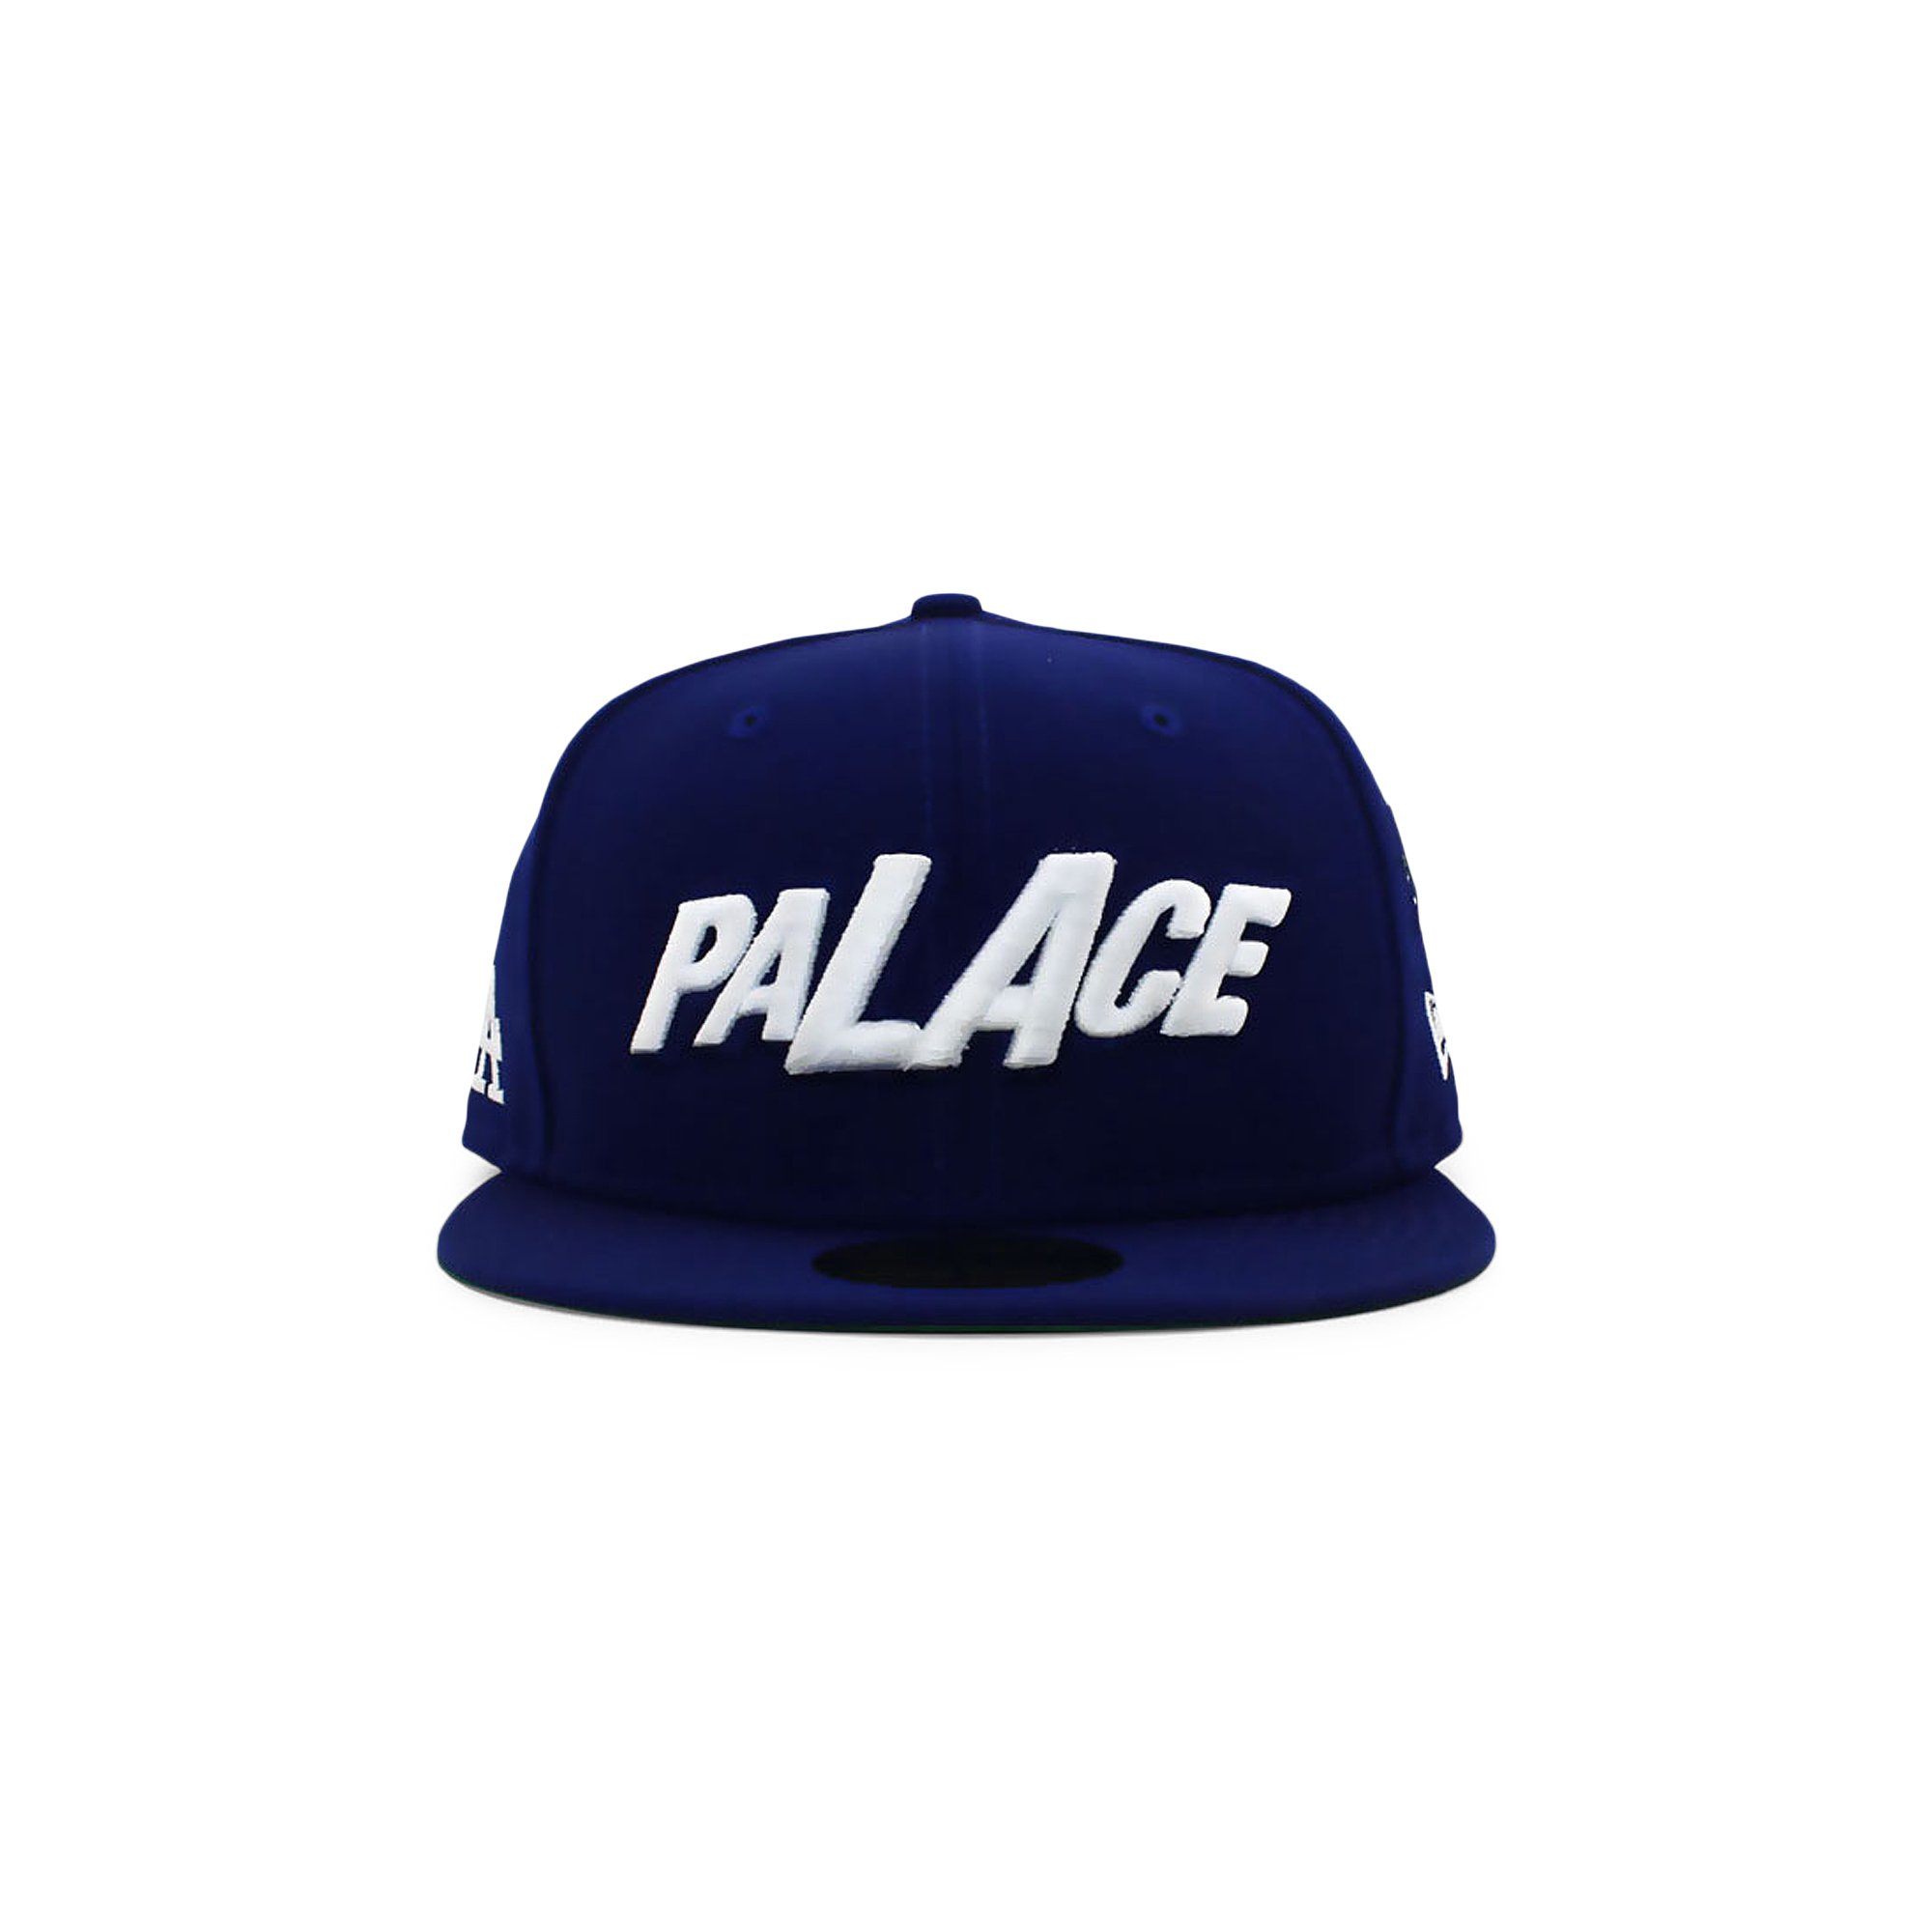 Buy Palace x New Era LA Fitted Hat 'Blue' - 12136783 | GOAT